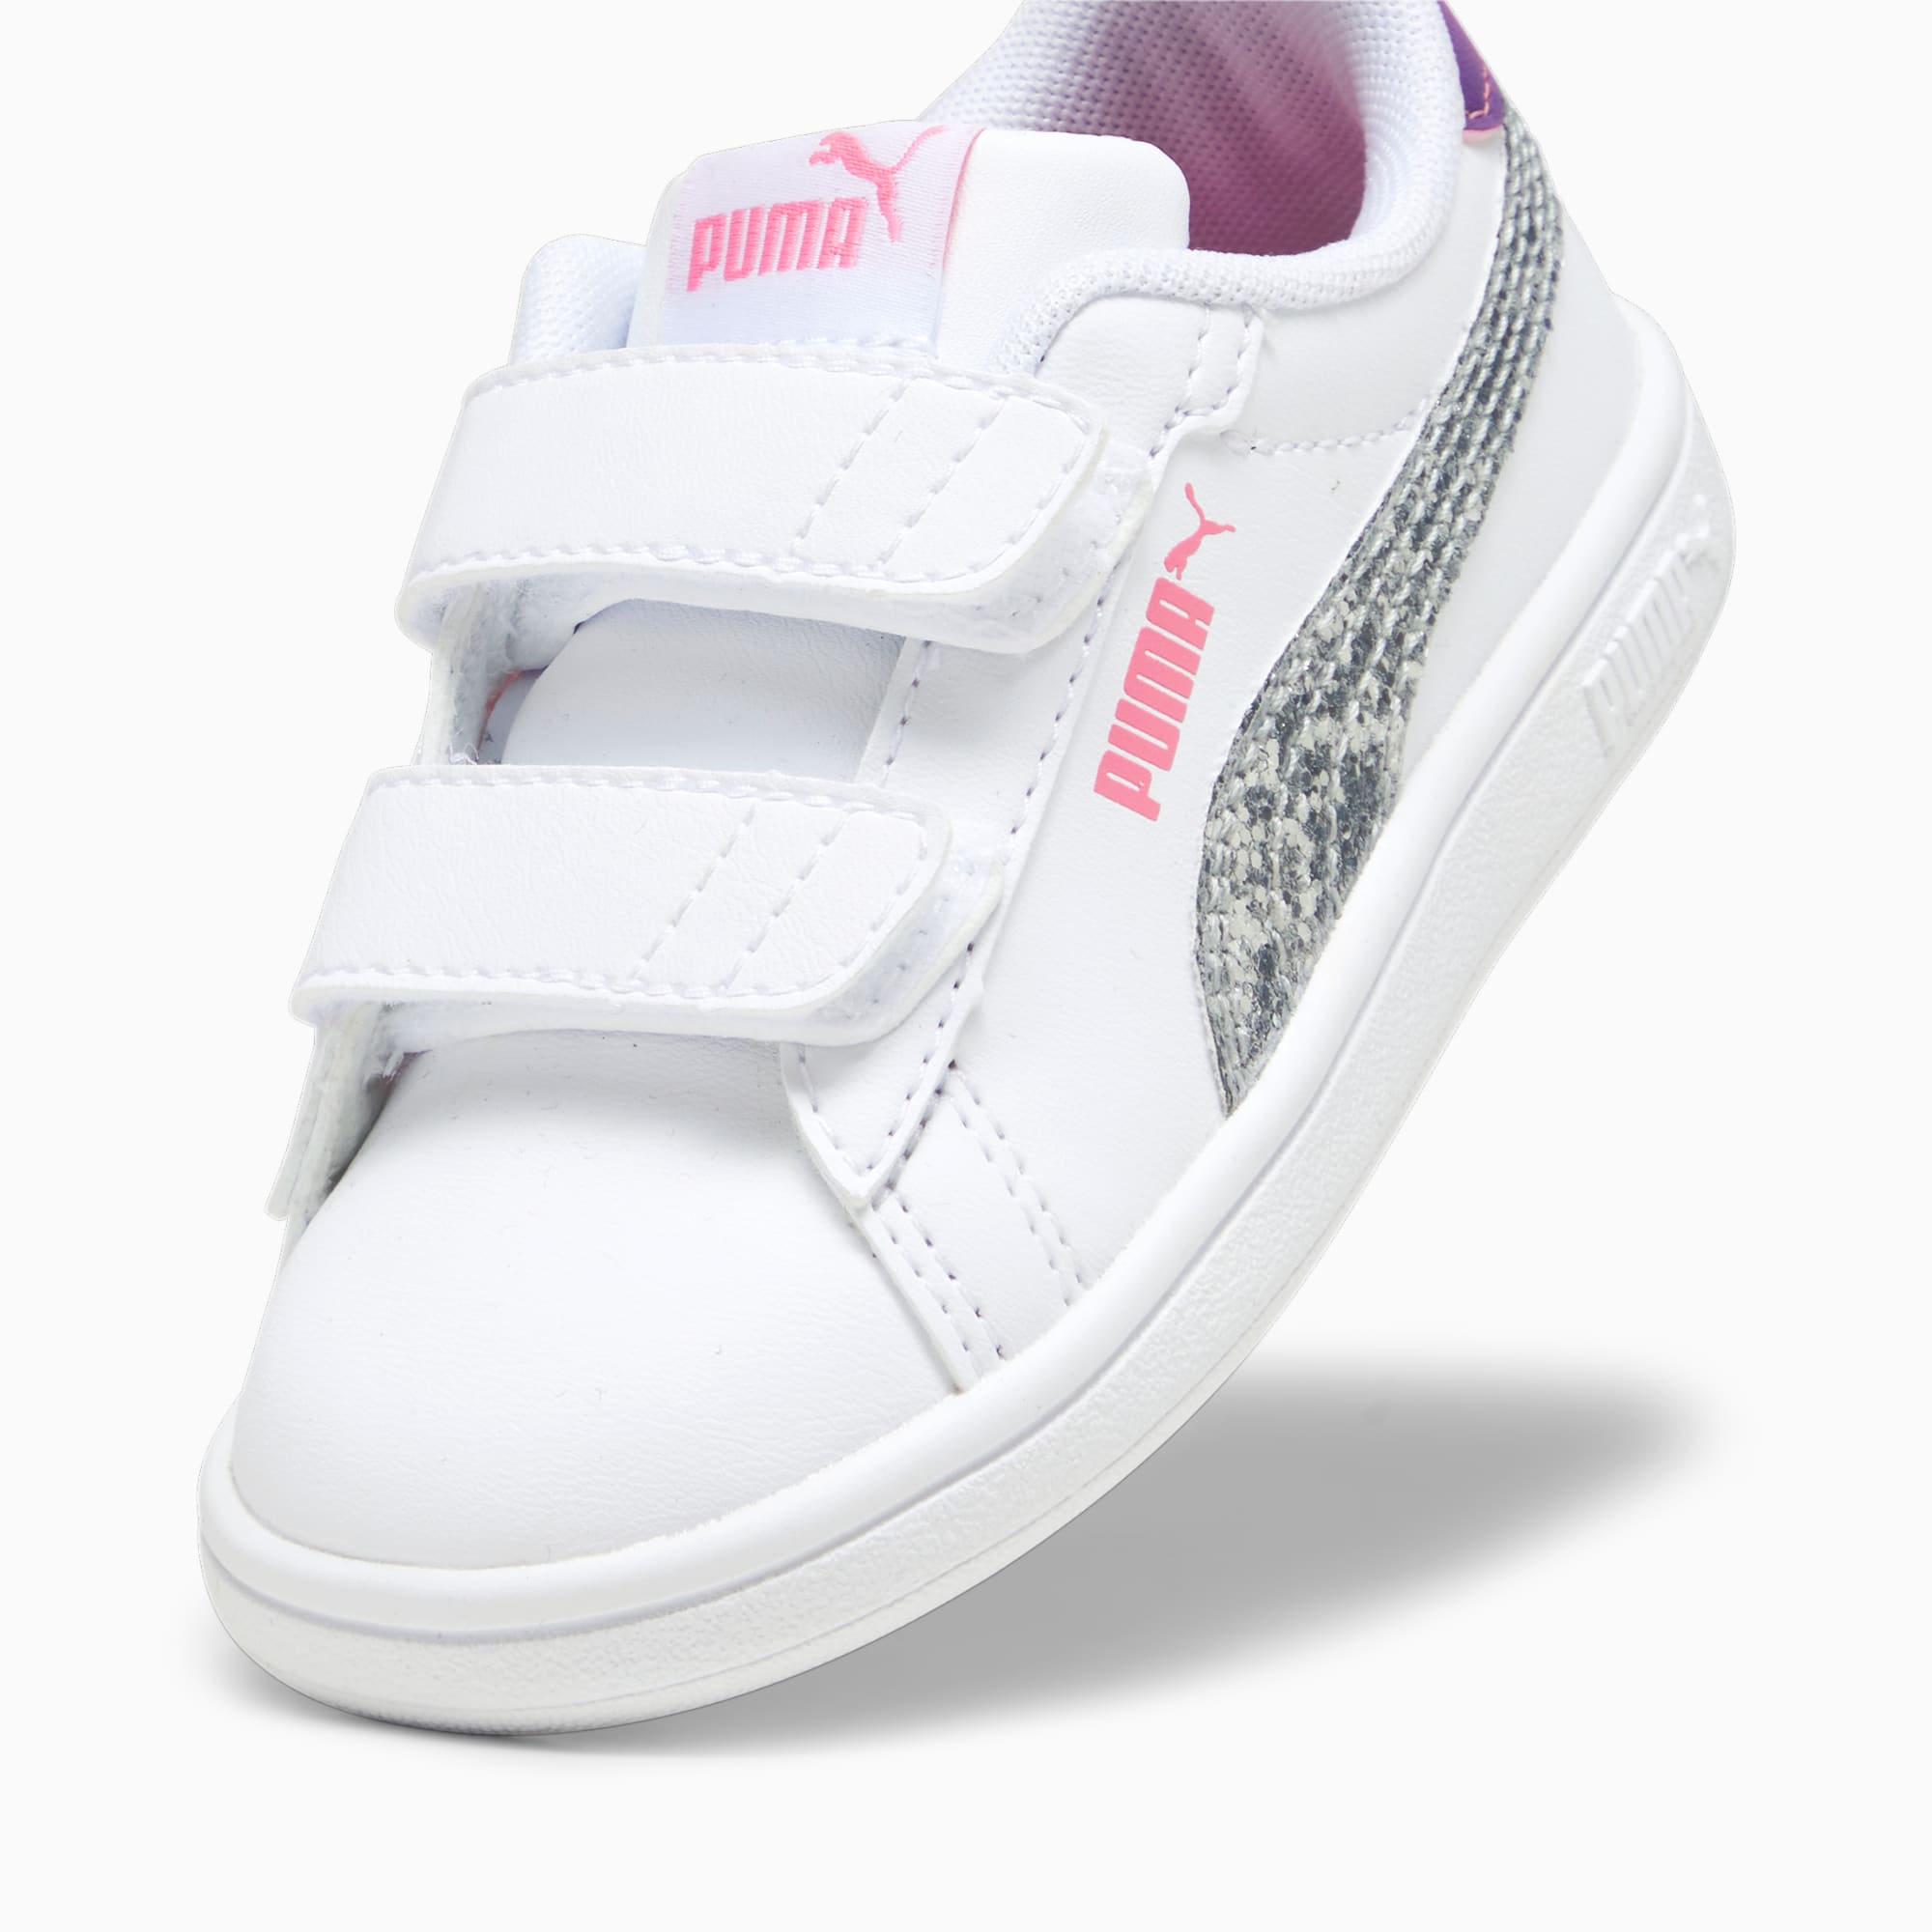 PUMA Smash 3.0 Star Glo Toddlers' Sneakers, White/Silver/Strawberry Burst